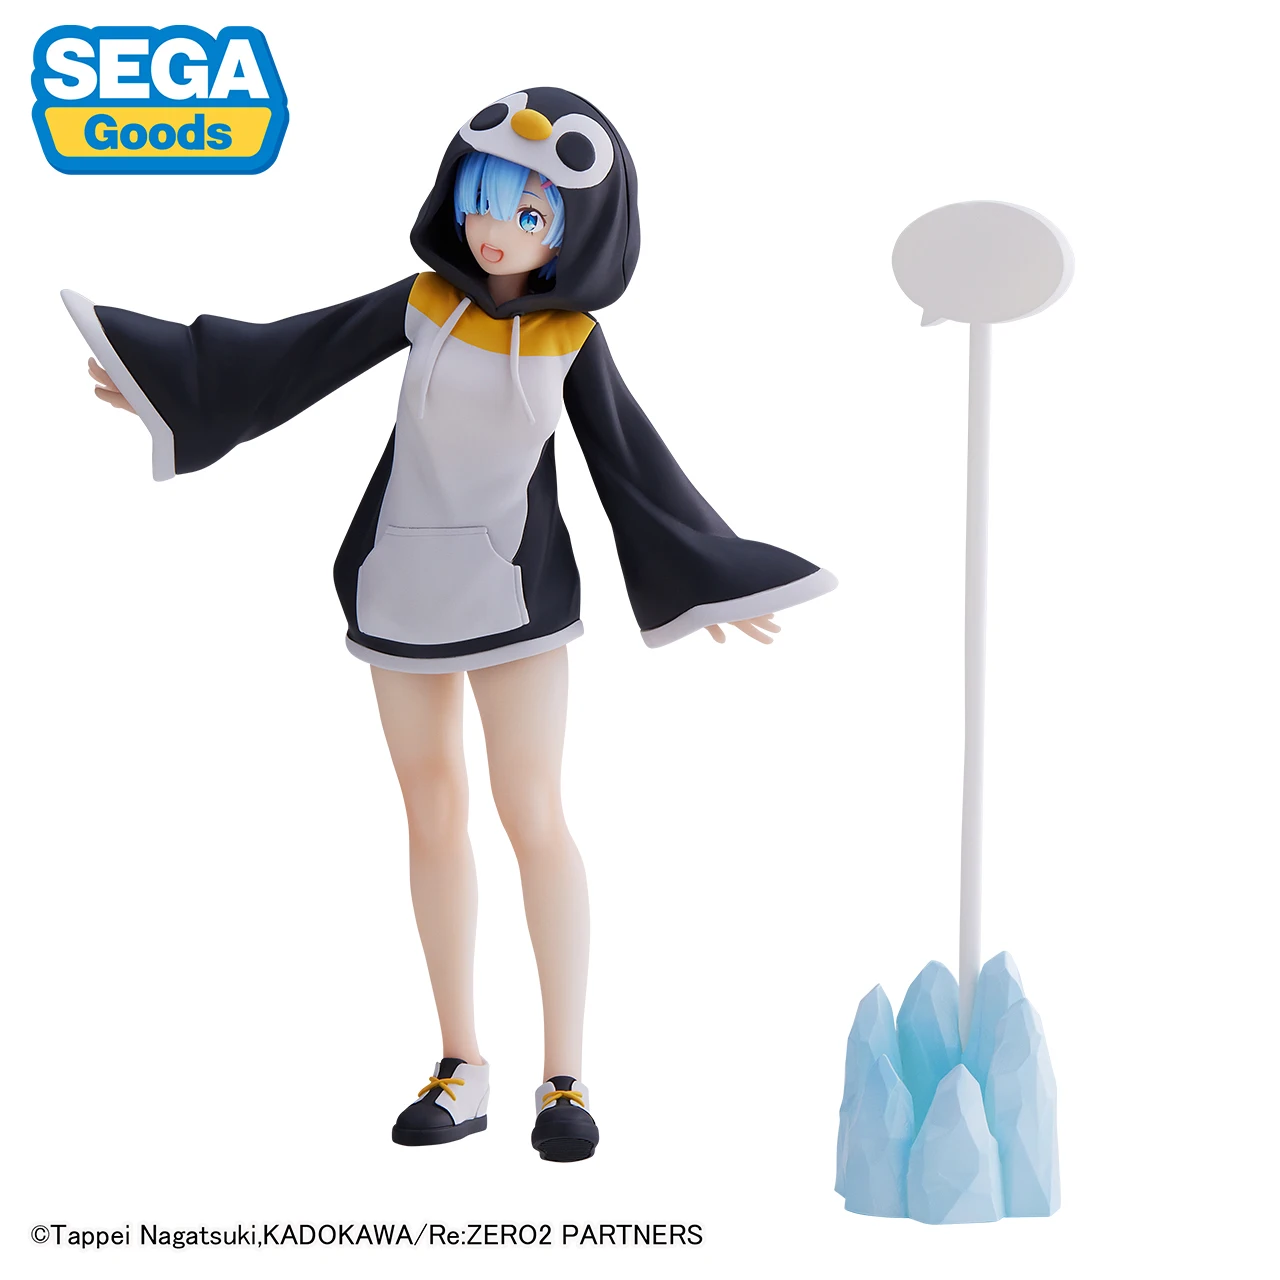 In Stock Original Genuine SEGA Luminasta REM RAM Re0 20CM PVC Action Figure Anime Figure Model Toys Collection Doll Gift